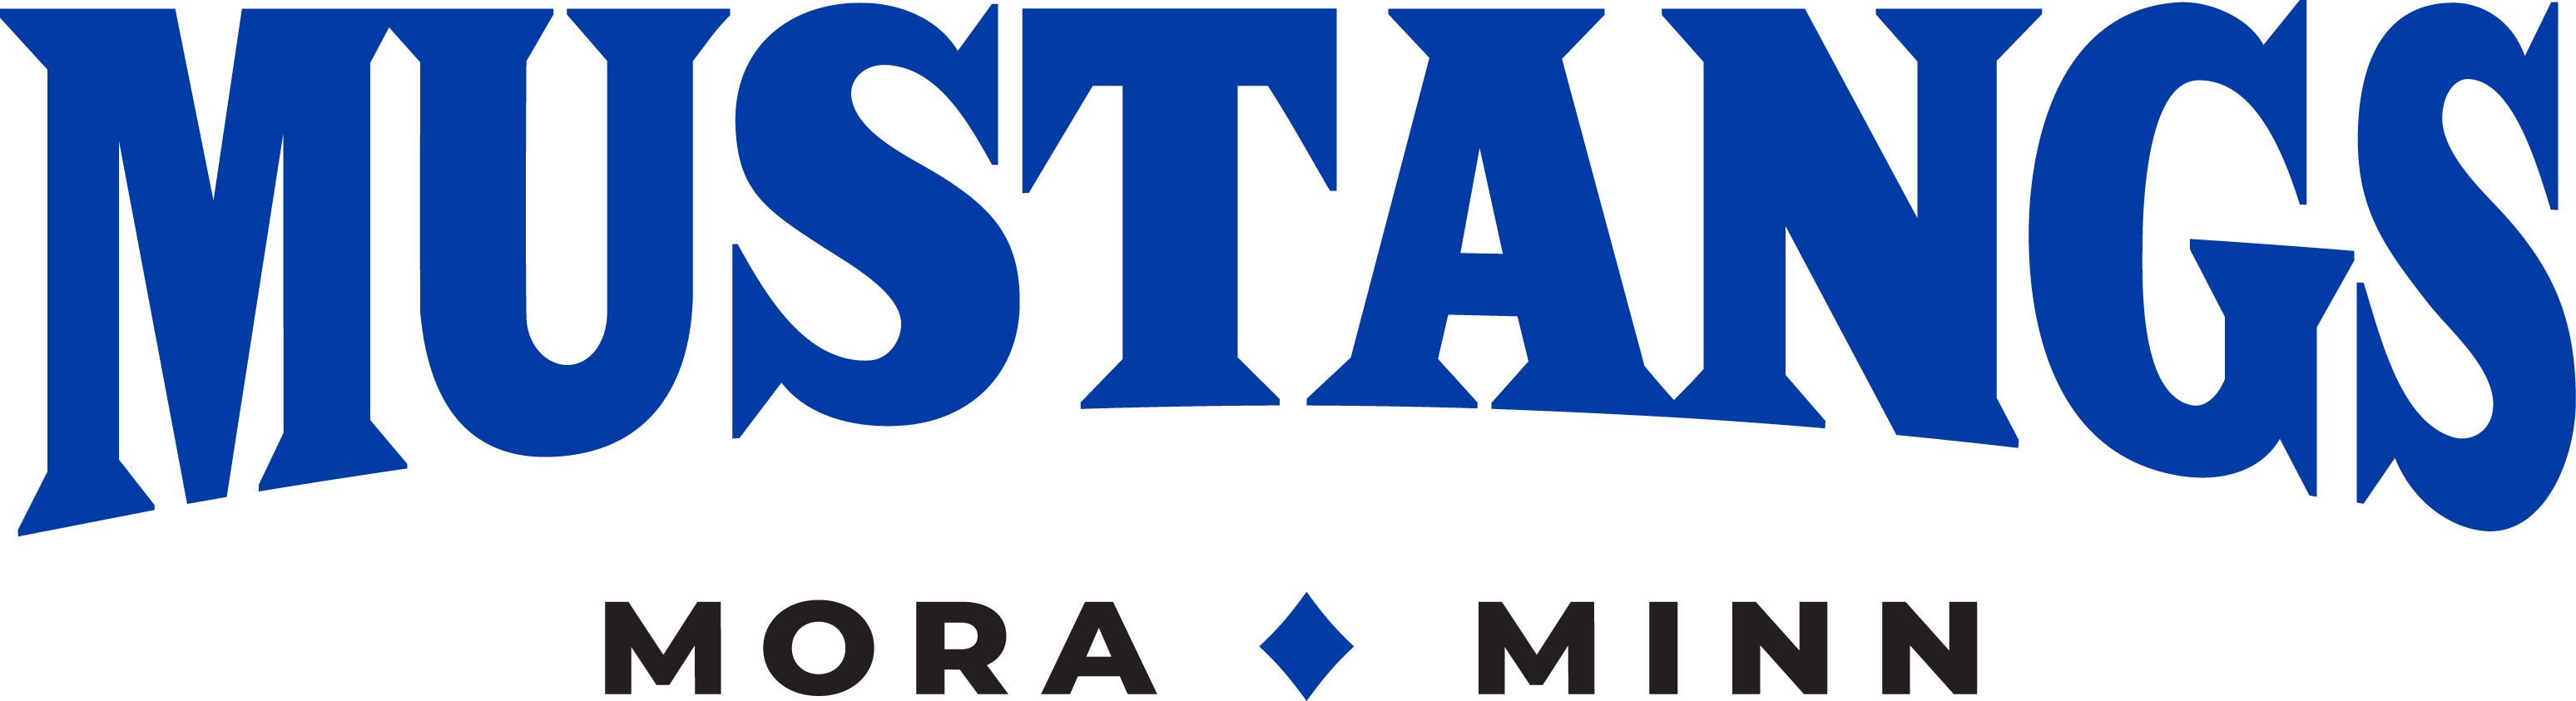 Mustangs Mora Minn Logo